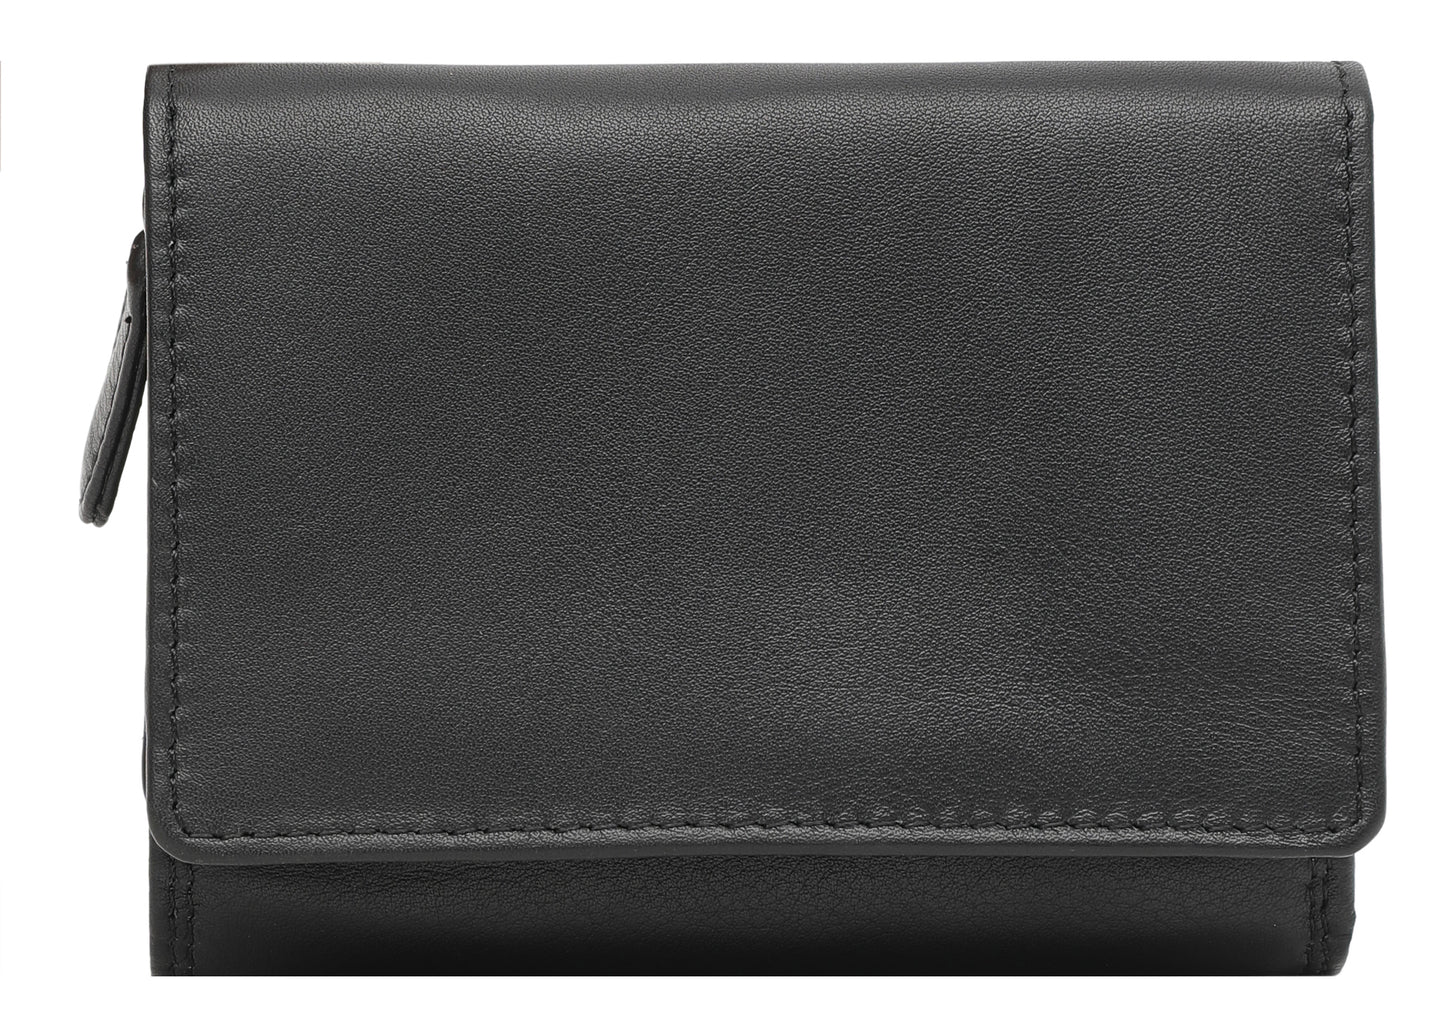 Calfnero Genuine Leather Women's wallet (2312-Black)